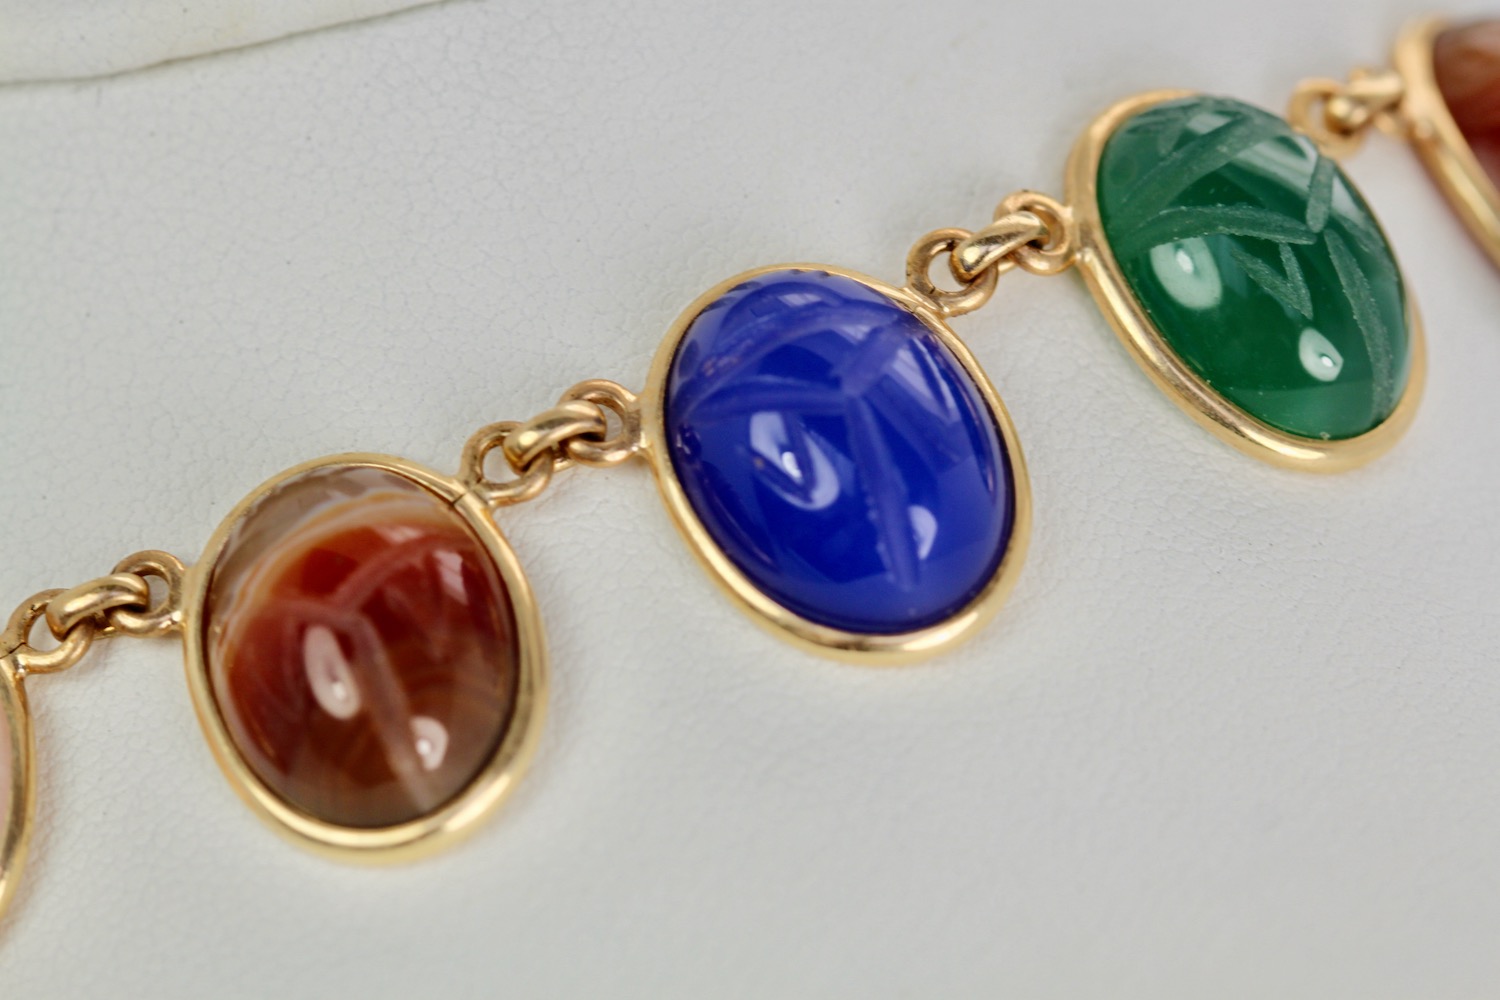 Scarab multi stone necklace plus two matching bracelets